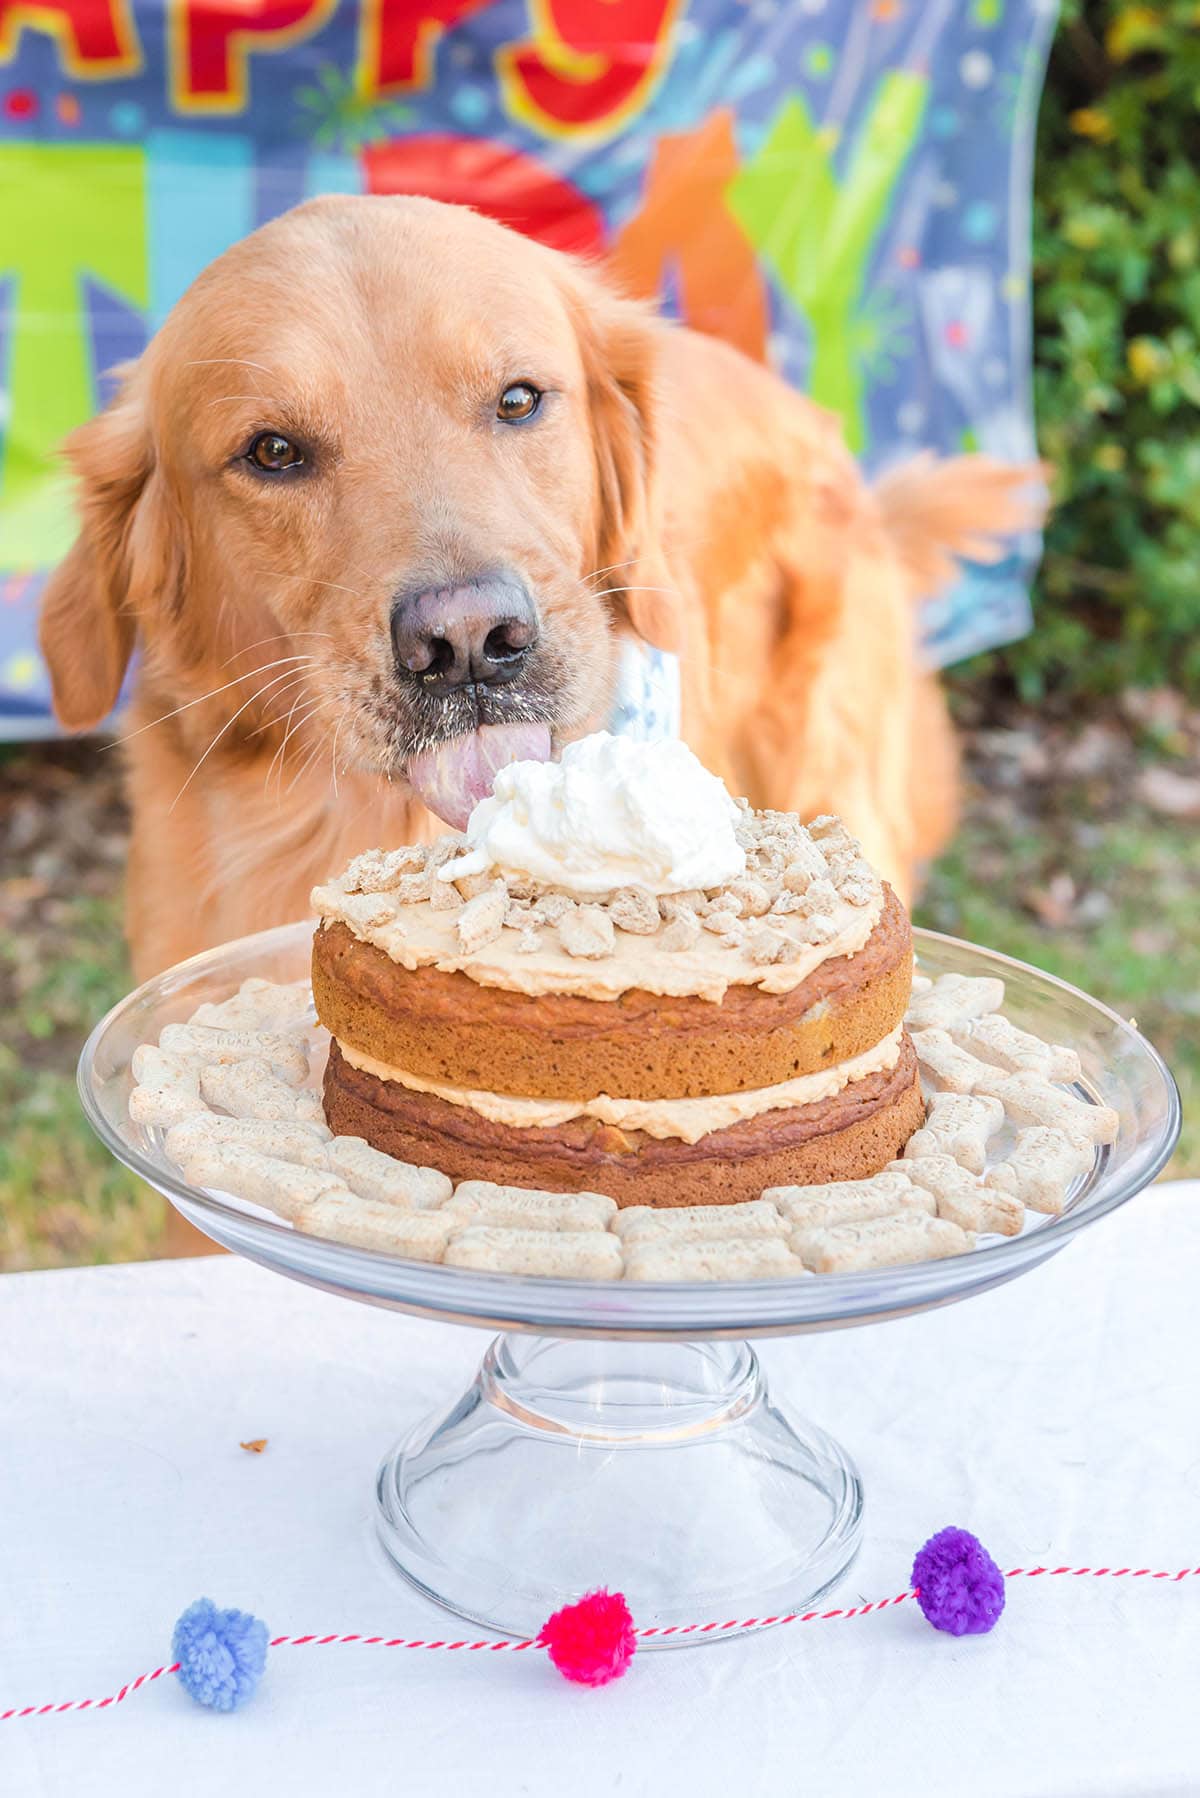 doggy eating birthday cake